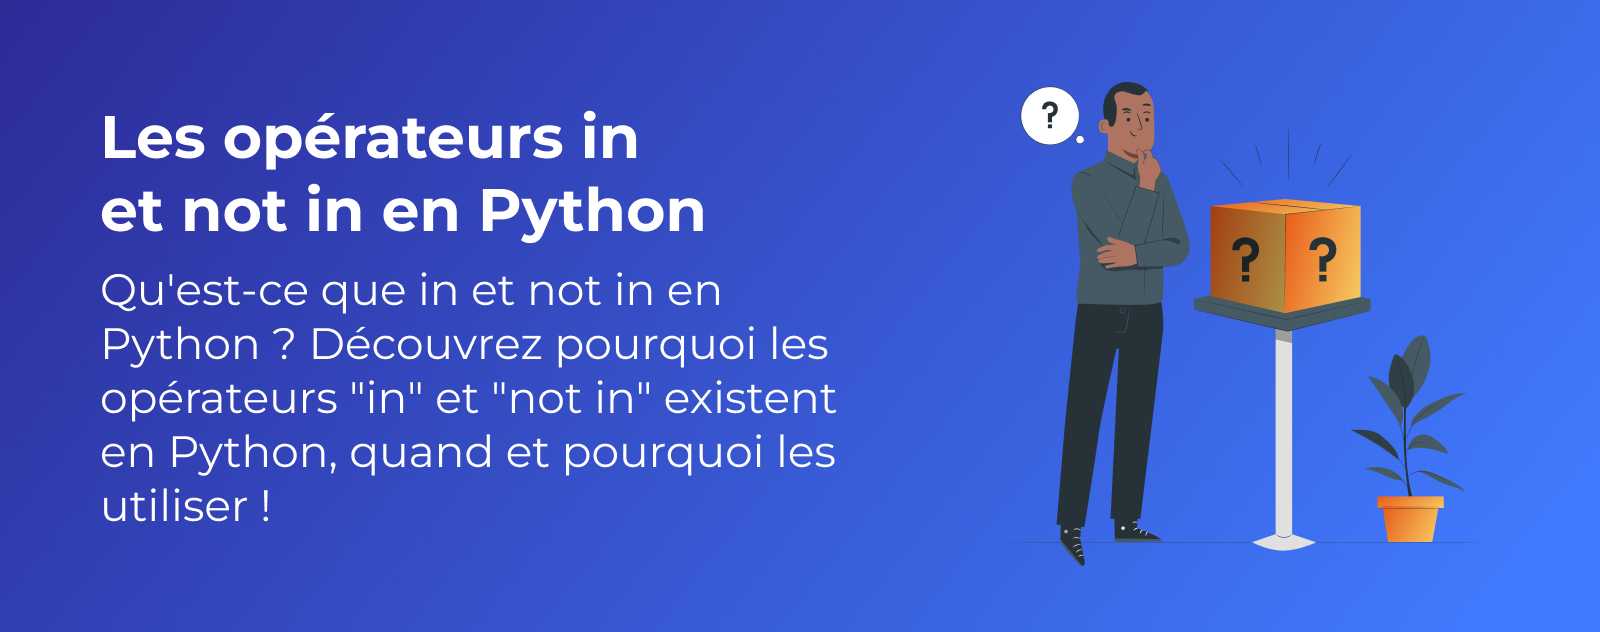 Les opérateurs in et not in en Python